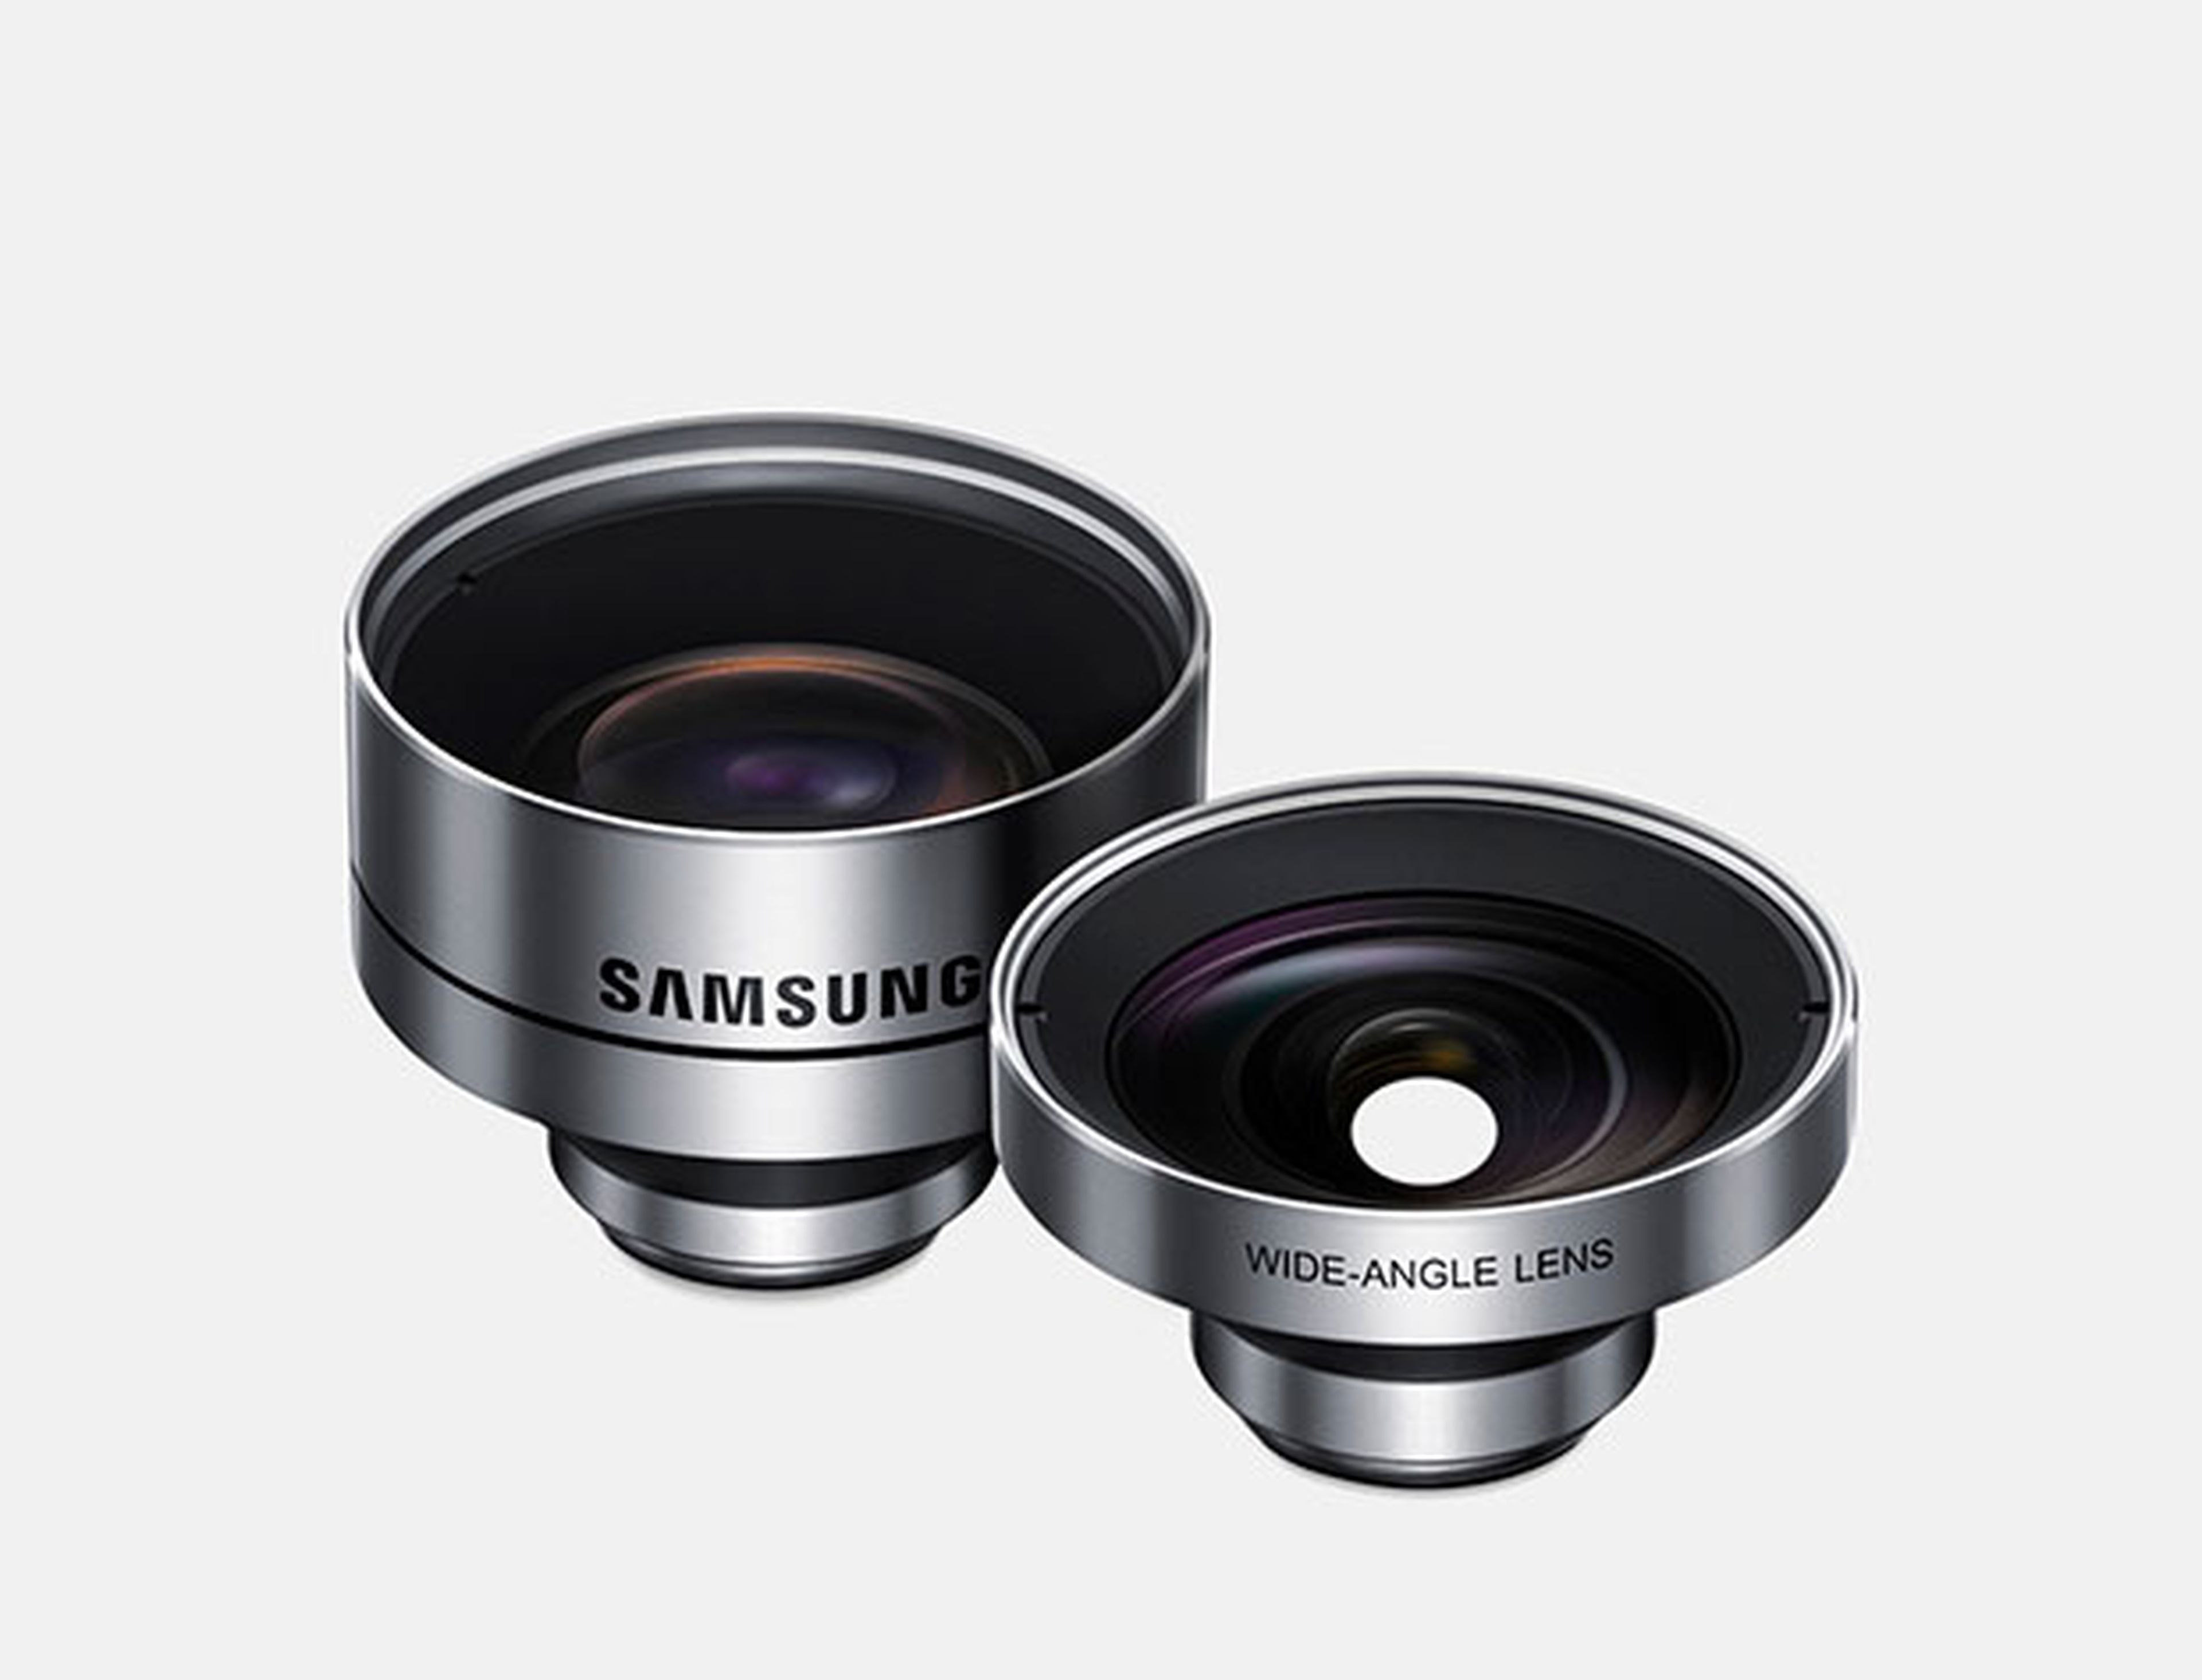 Samsung Galaxy S7 lens cover